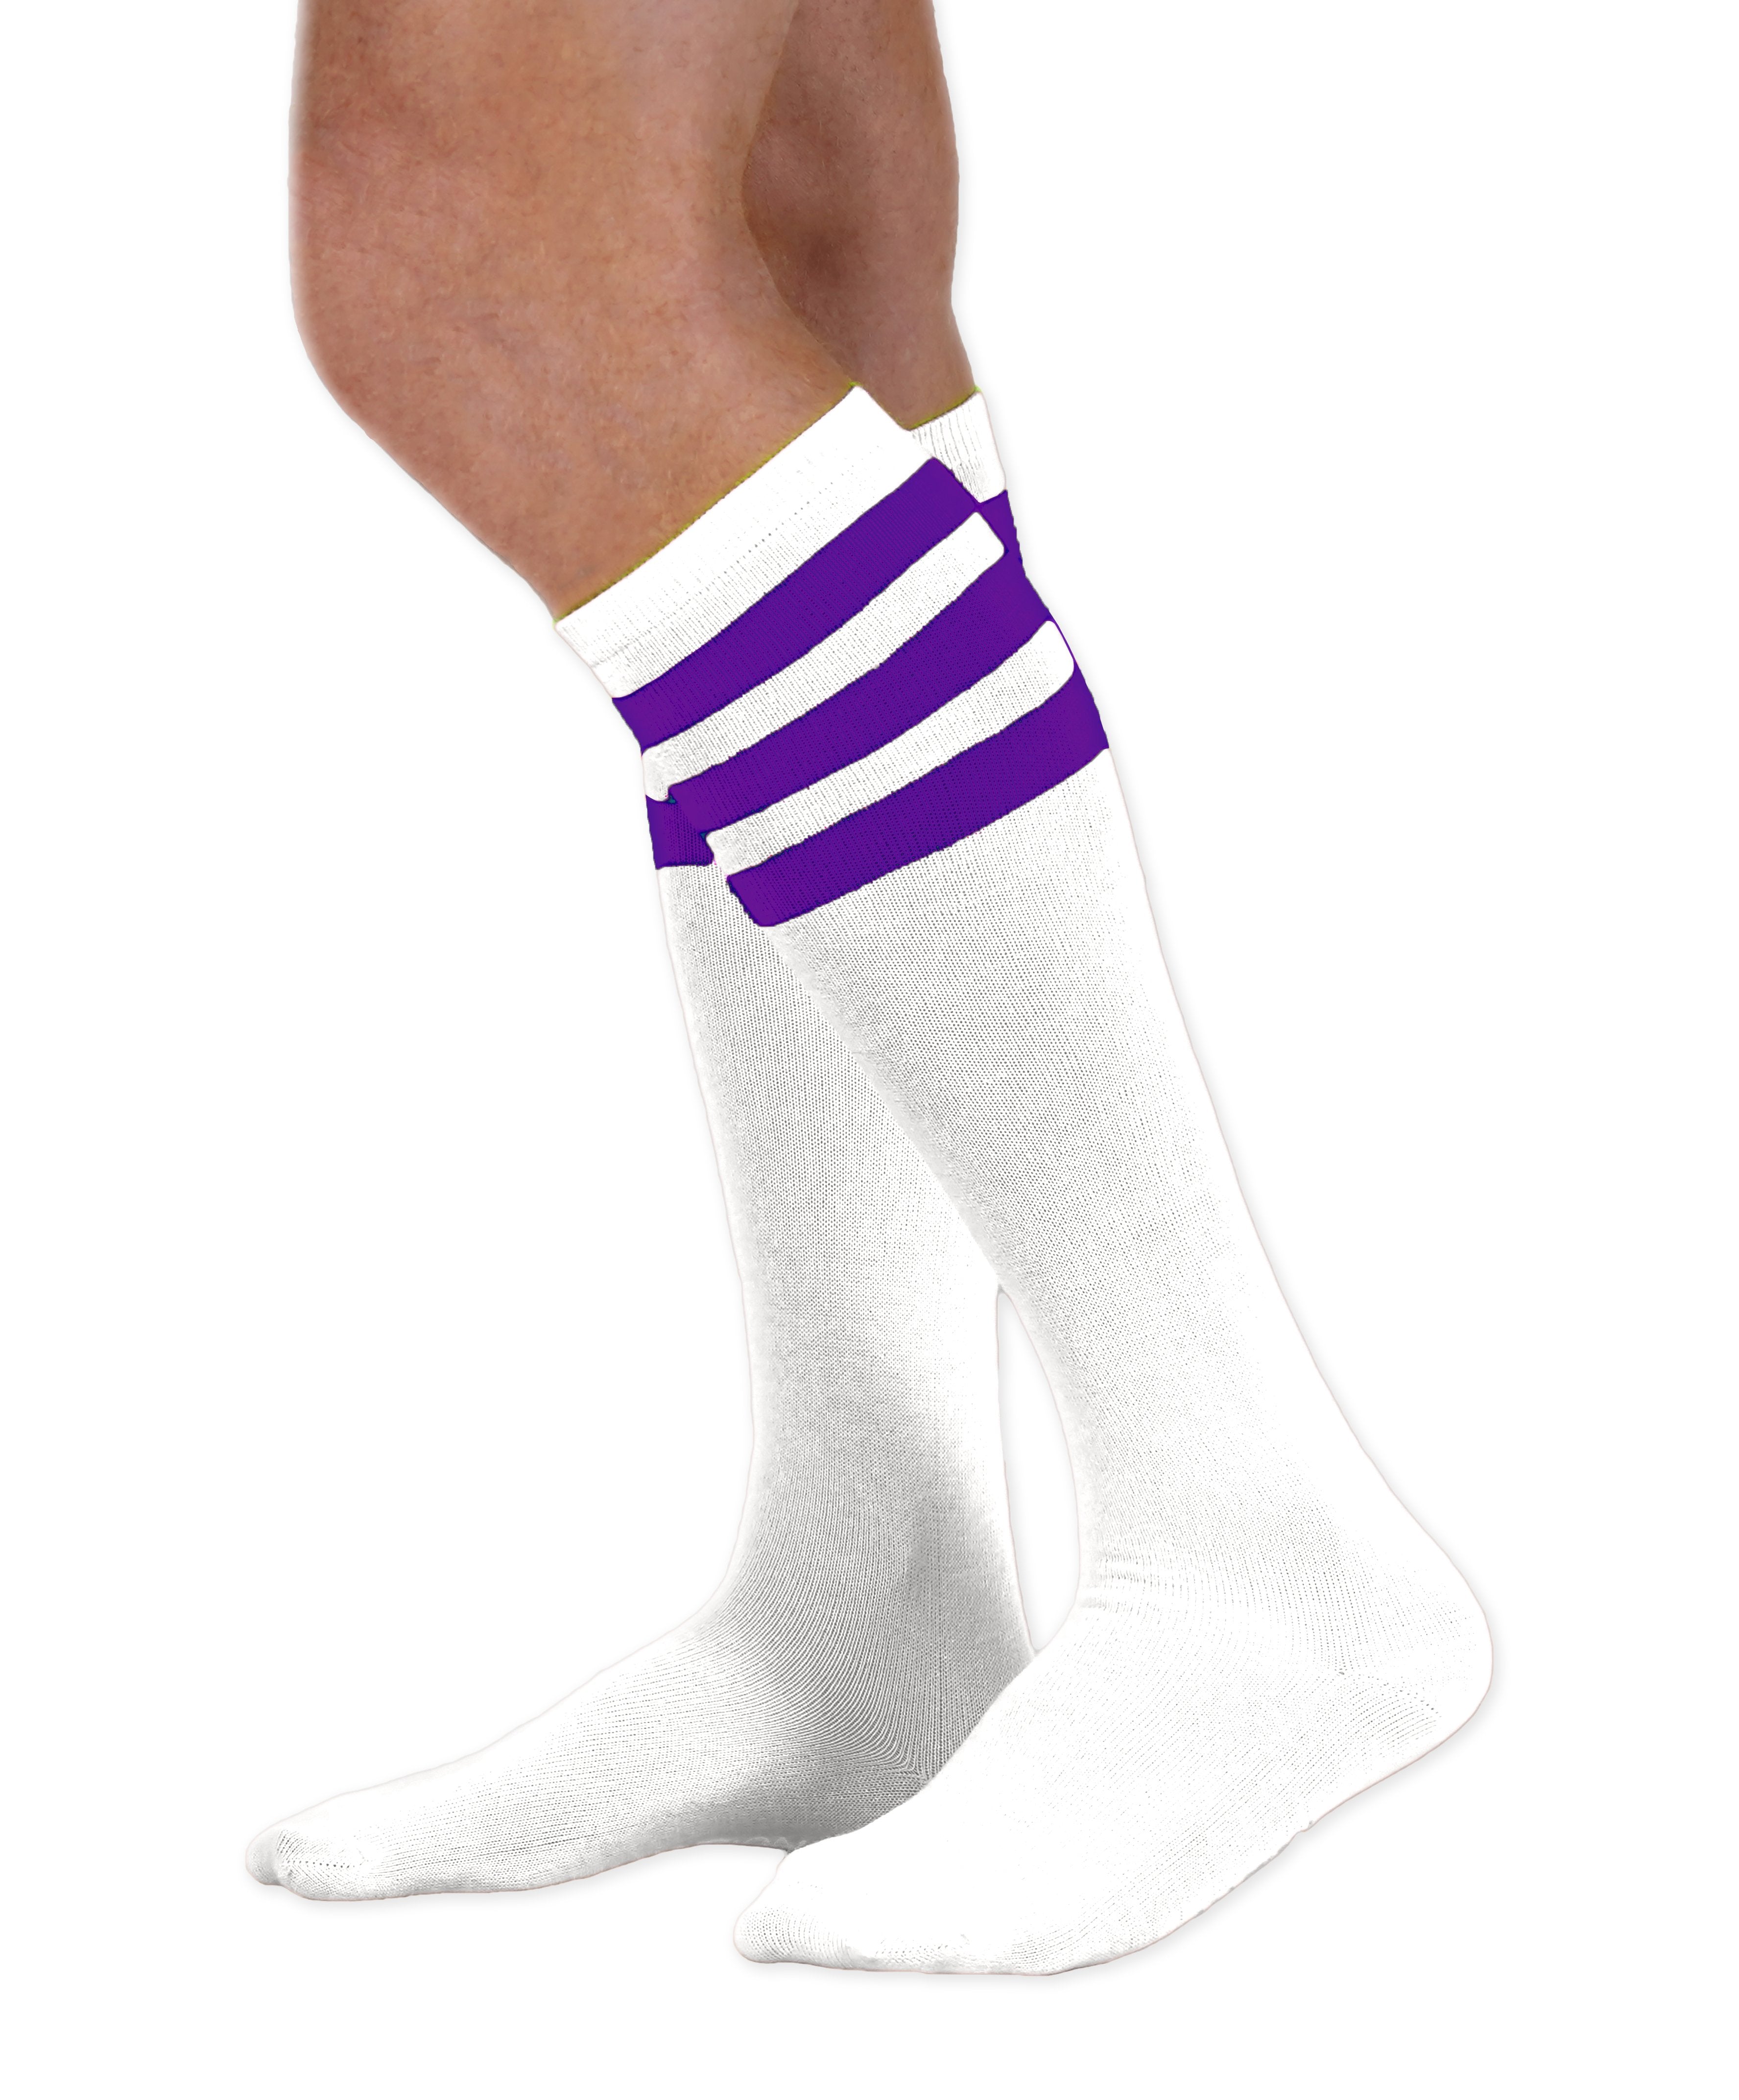 Unisex adult size white knee high tube sock with three purple stripes